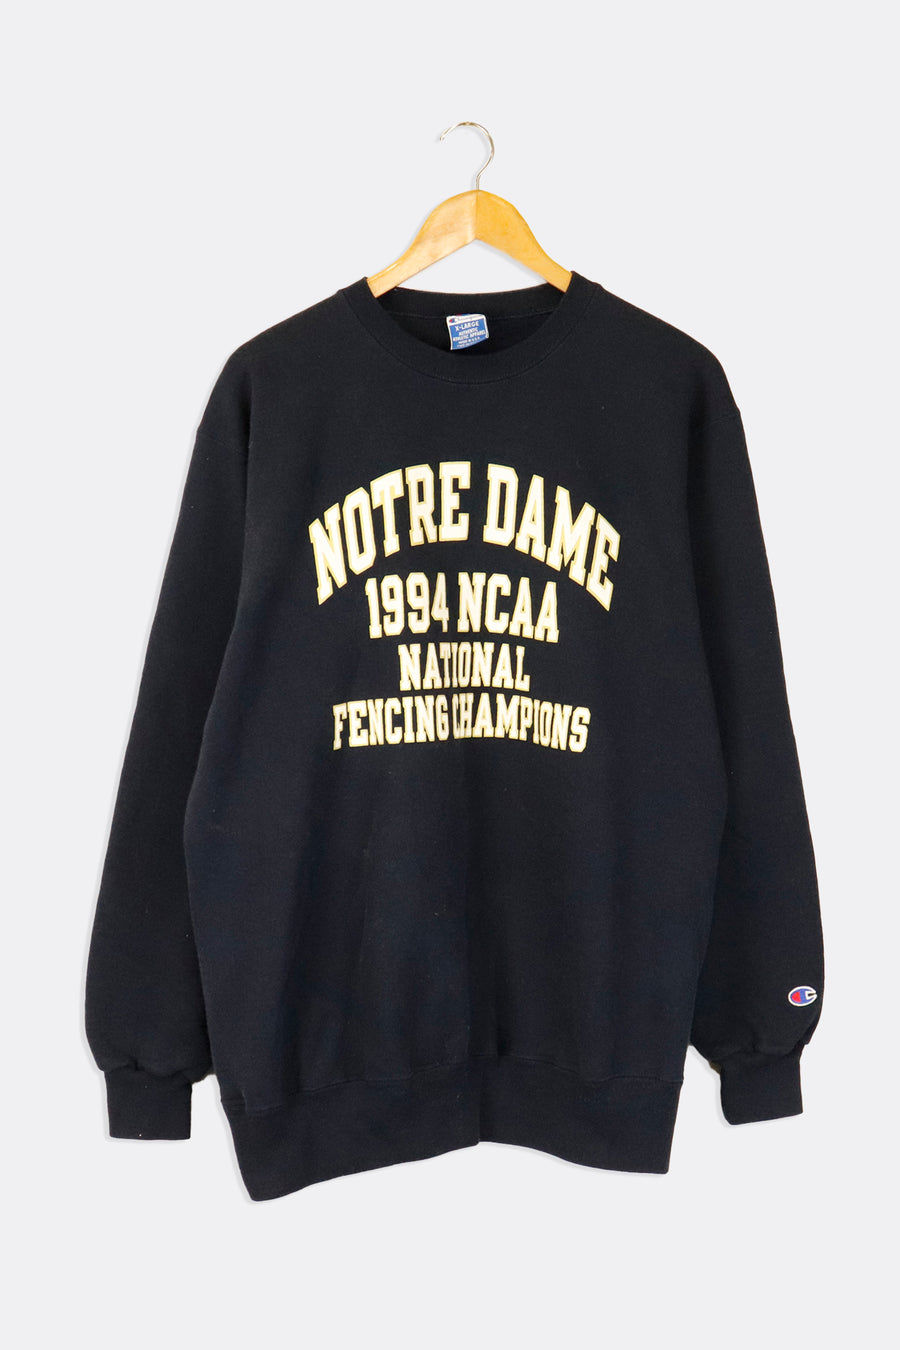 Vintage 1994 Champion Notre Dame Ncaa National Fencing Champions Sweatshirt Sz XL